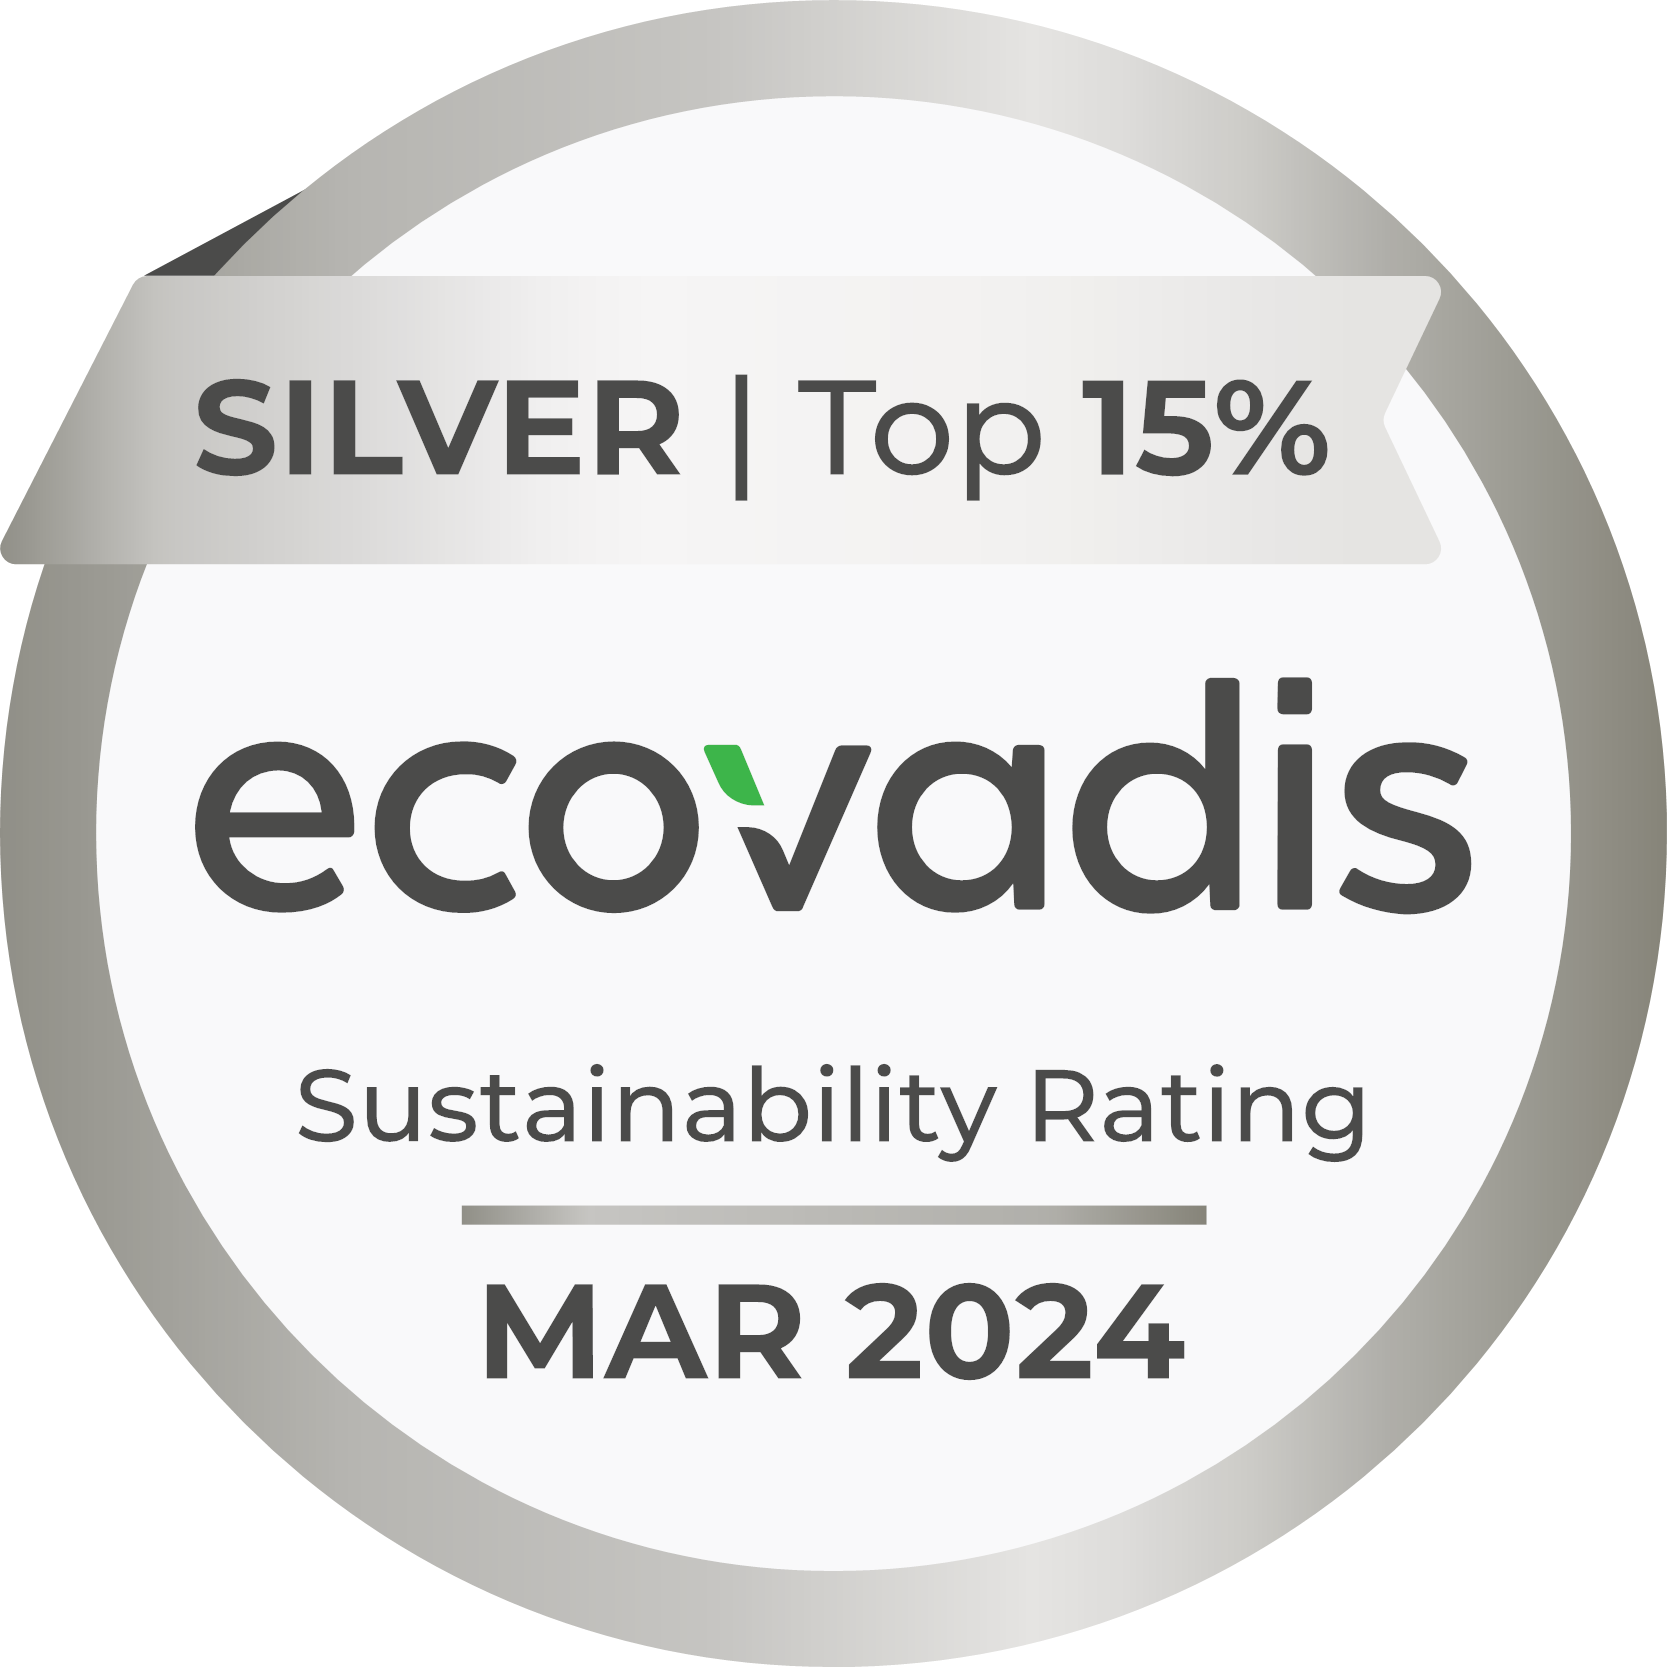 Medaille d'argent EcoVadis mars 2024